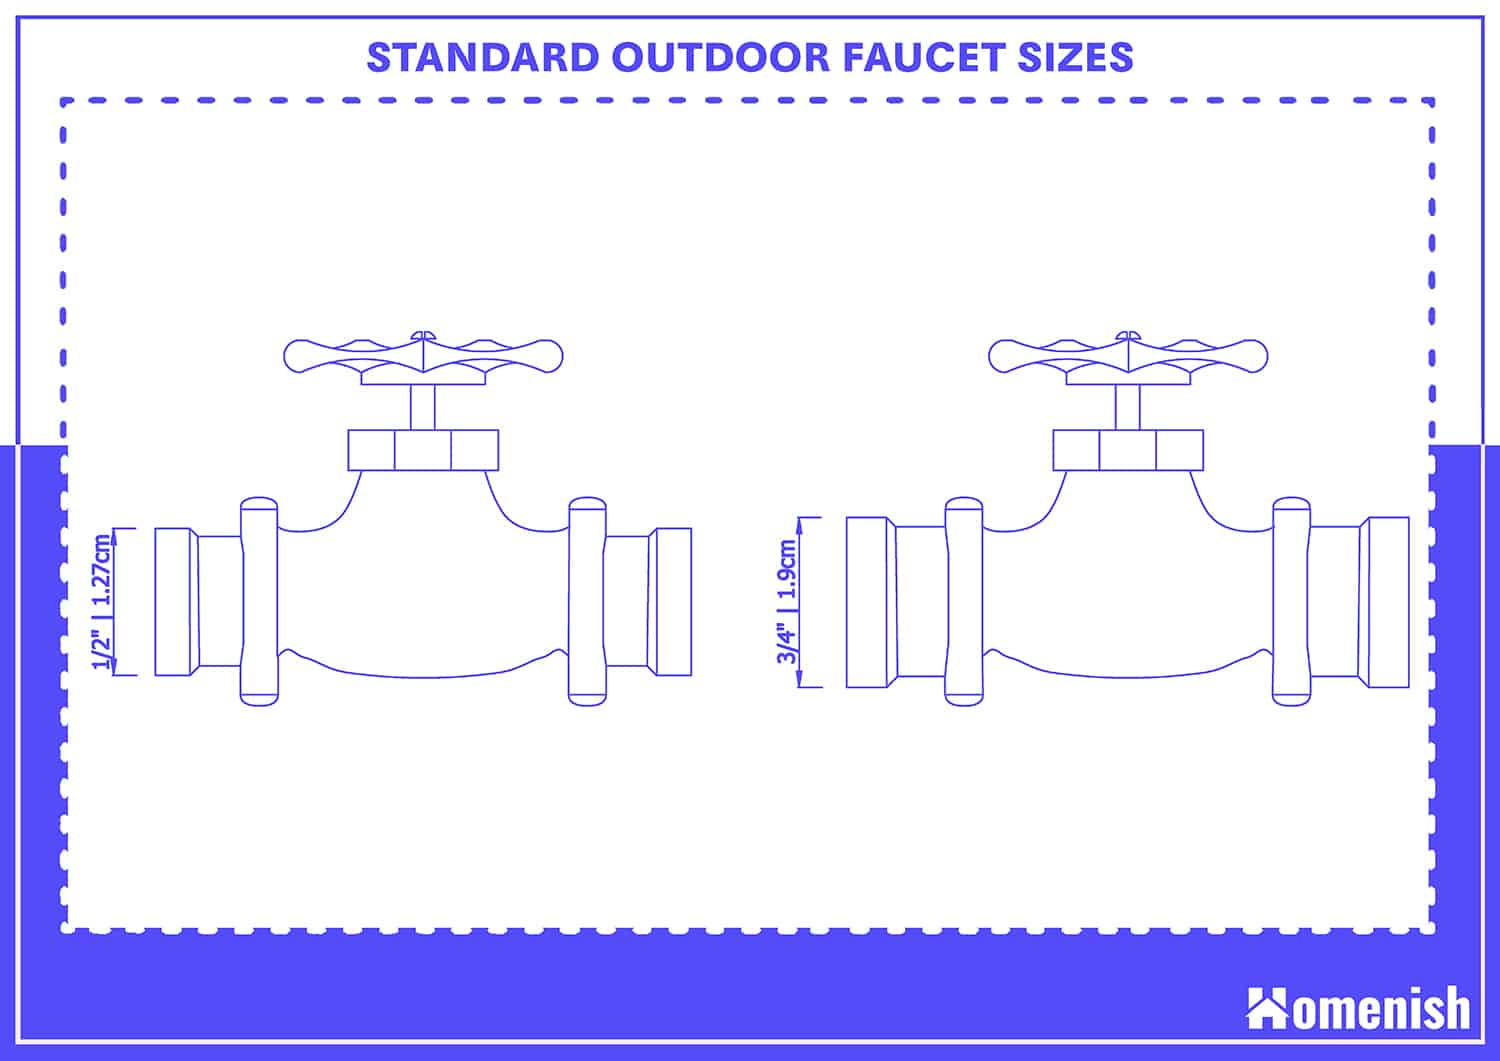 Standard Size of an Outdoor Faucet